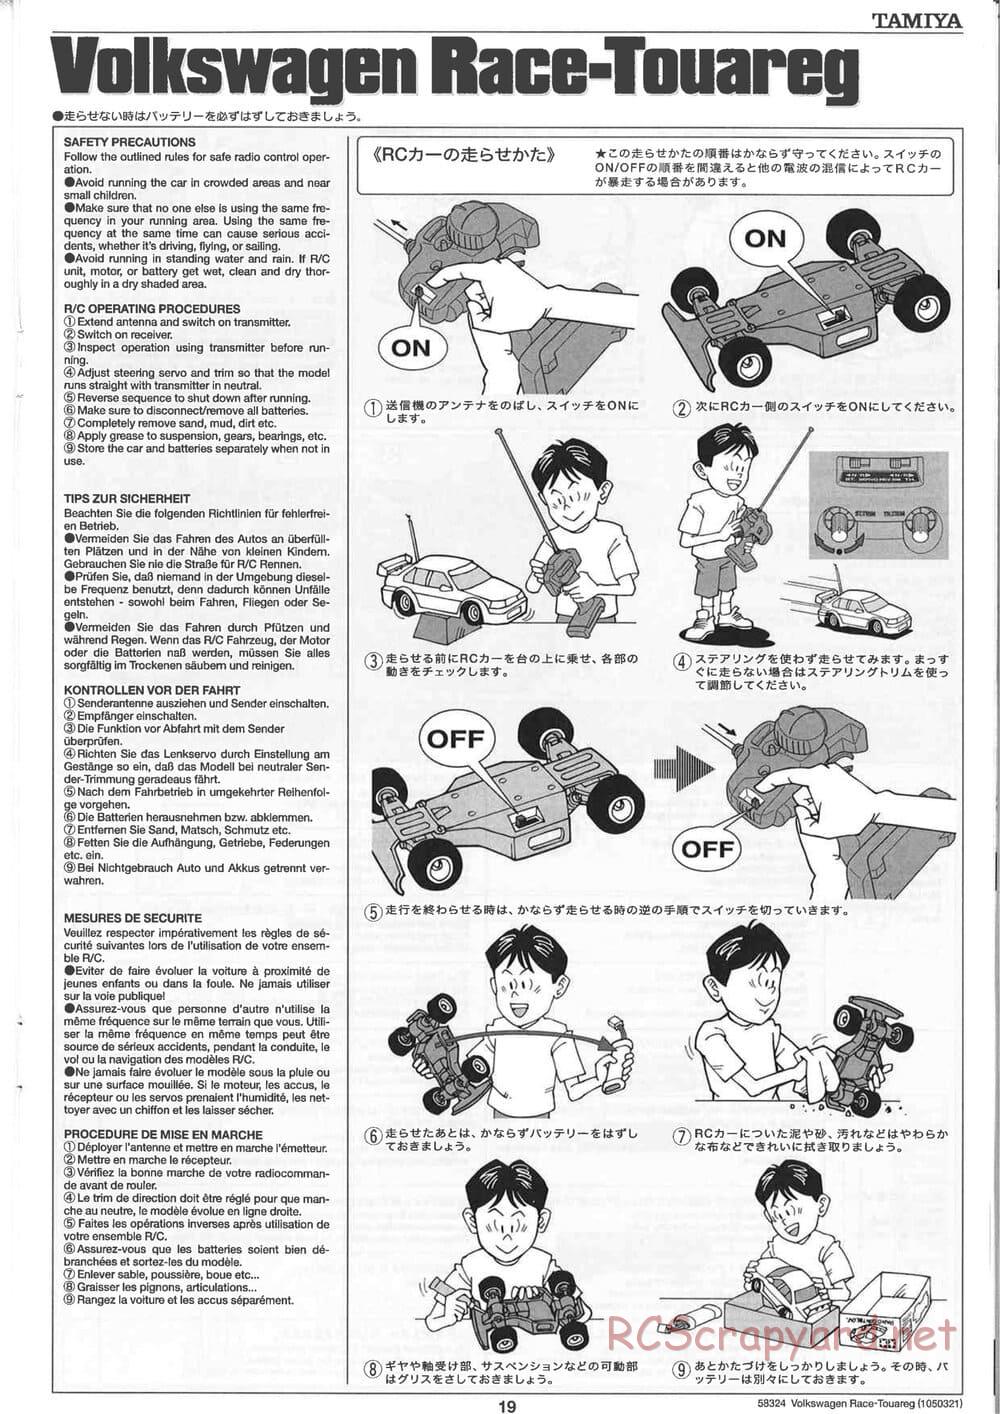 Tamiya - Volkswagen Race-Touareg - CC-01 Chassis - Manual - Page 19